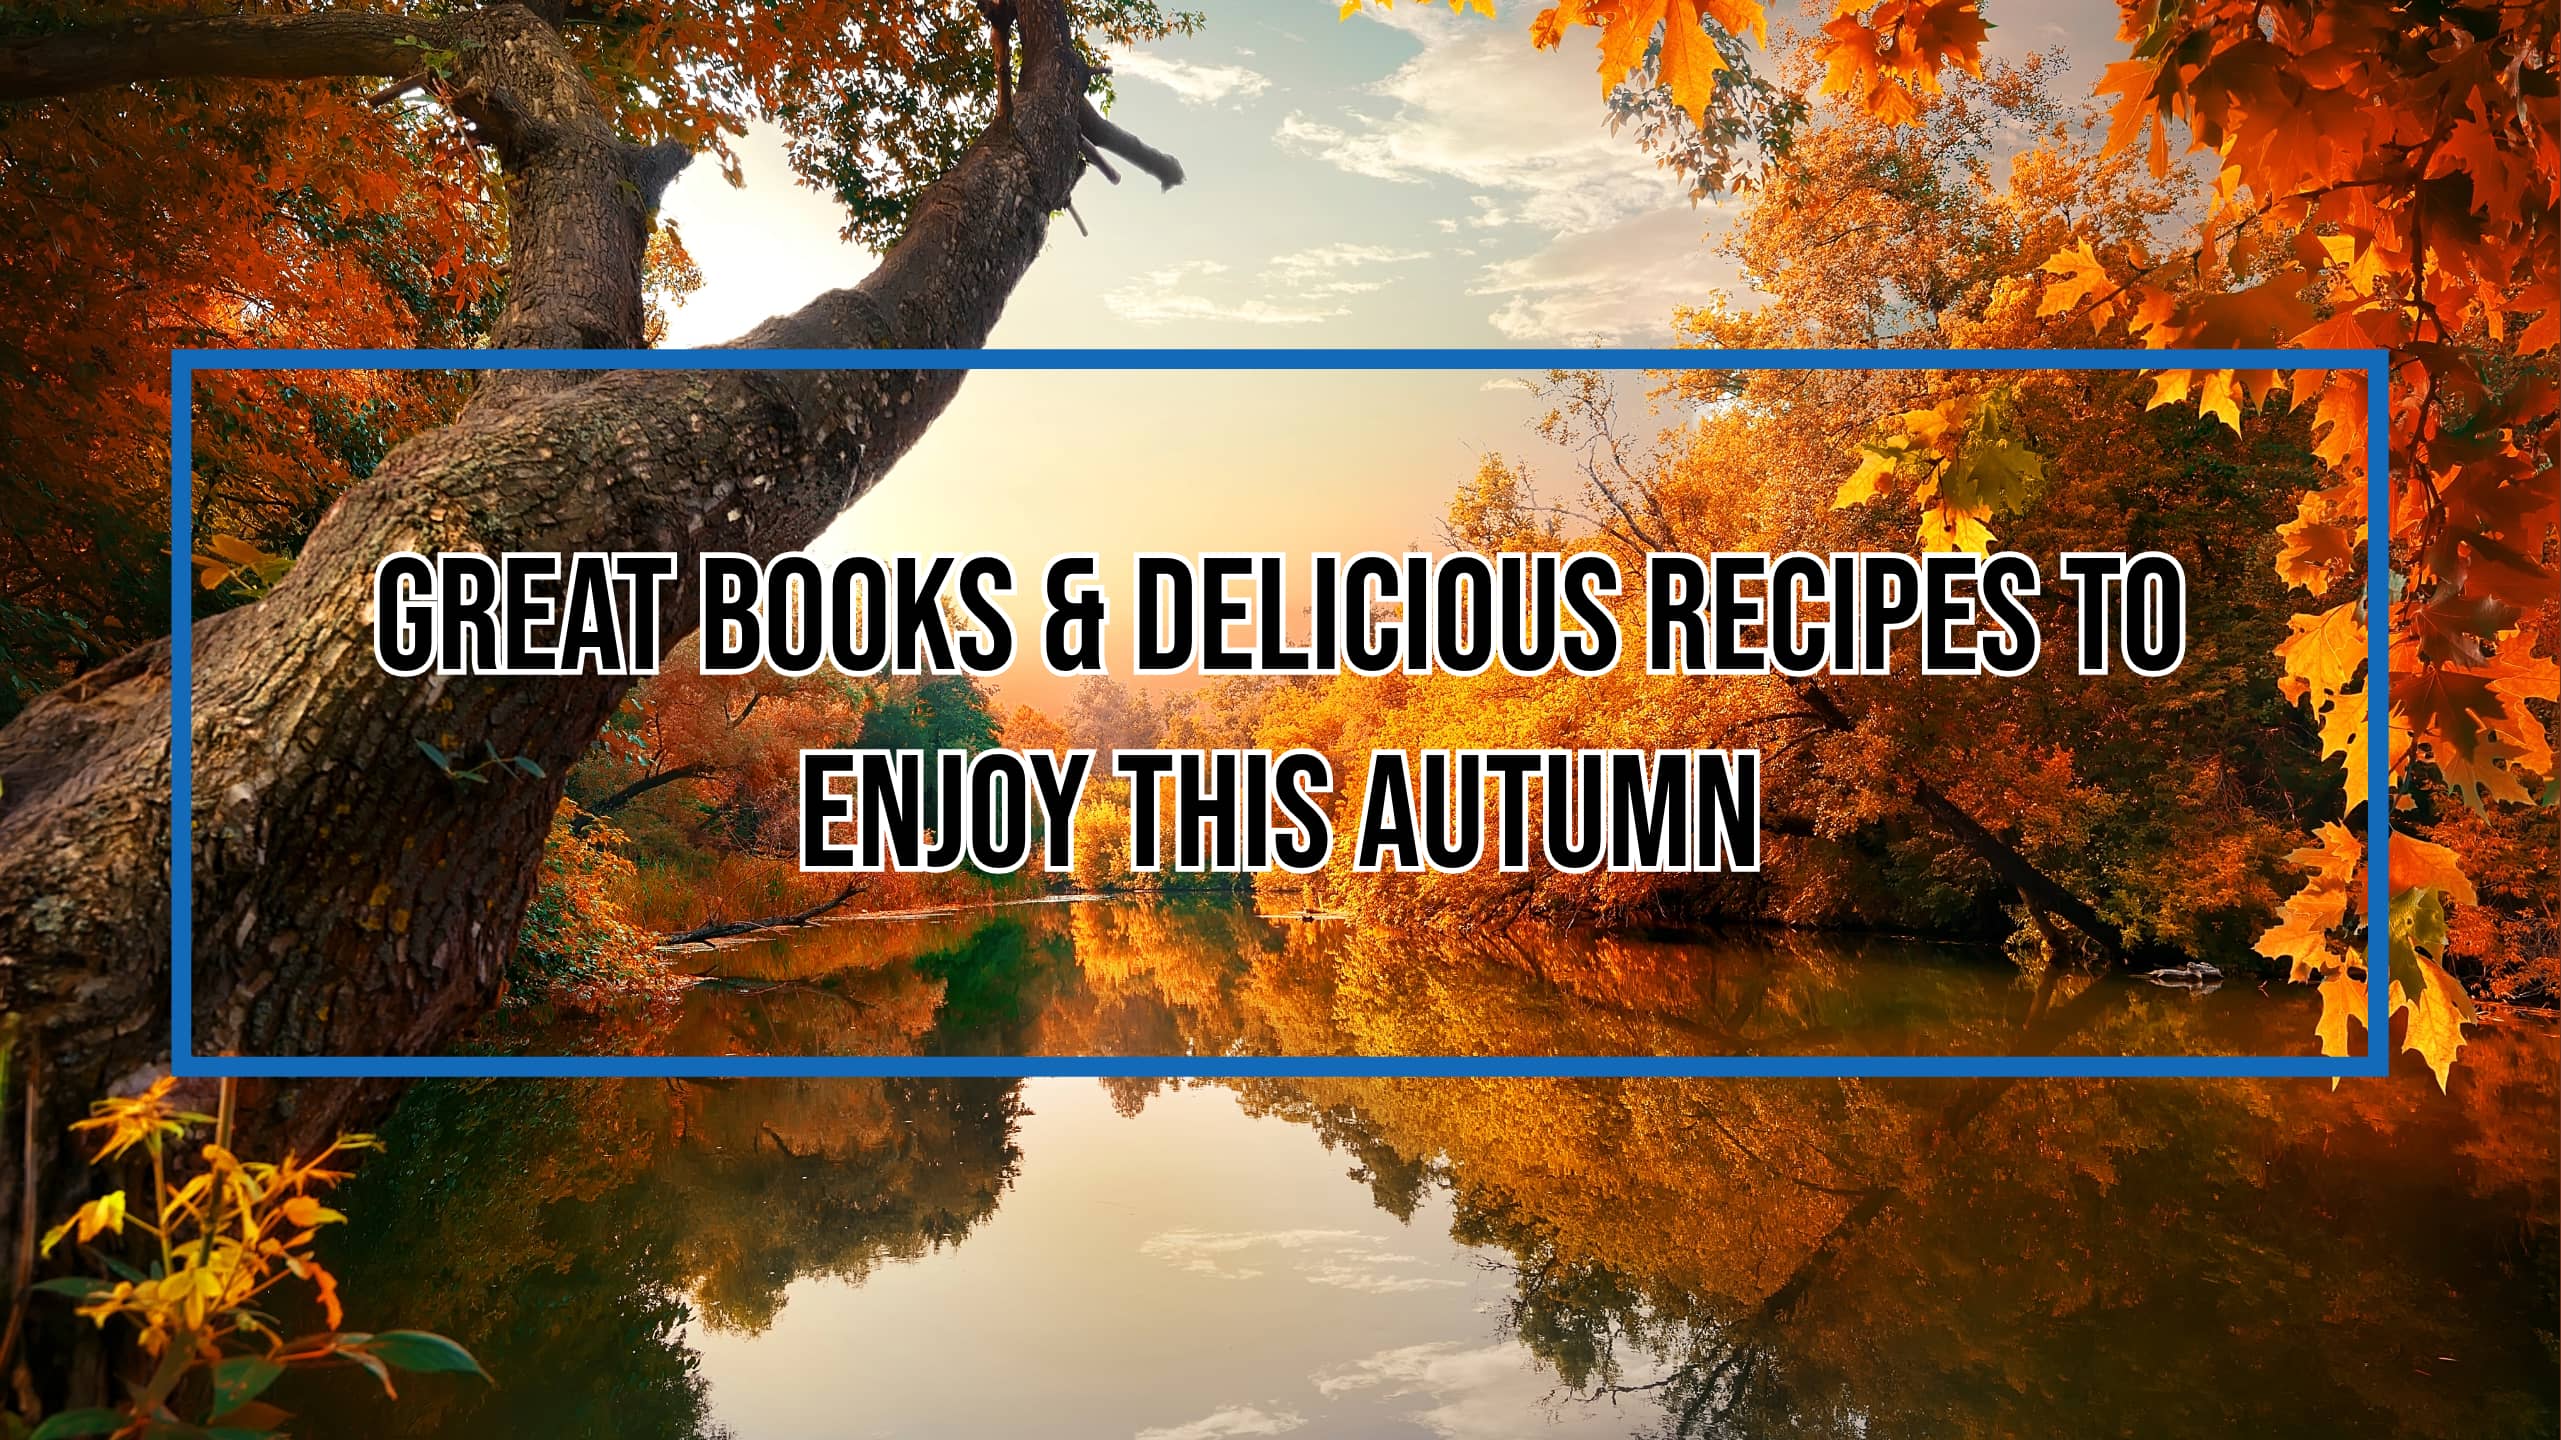 Great Books & Delicious Recipes To Enjoy This Autumn